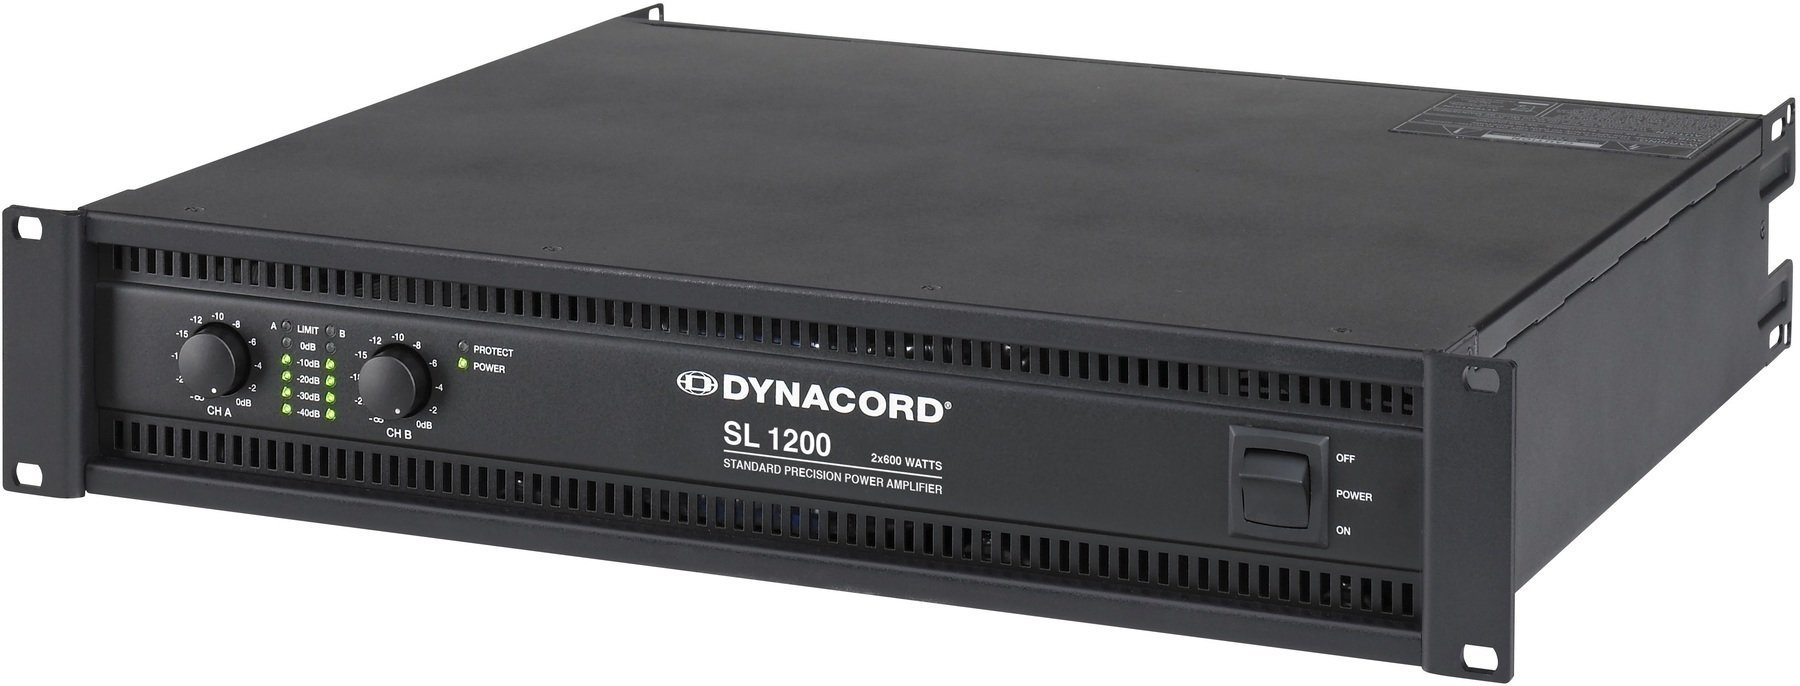 Endstufe Leistungsverstärker Dynacord SL-1200 Endstufe Leistungsverstärker